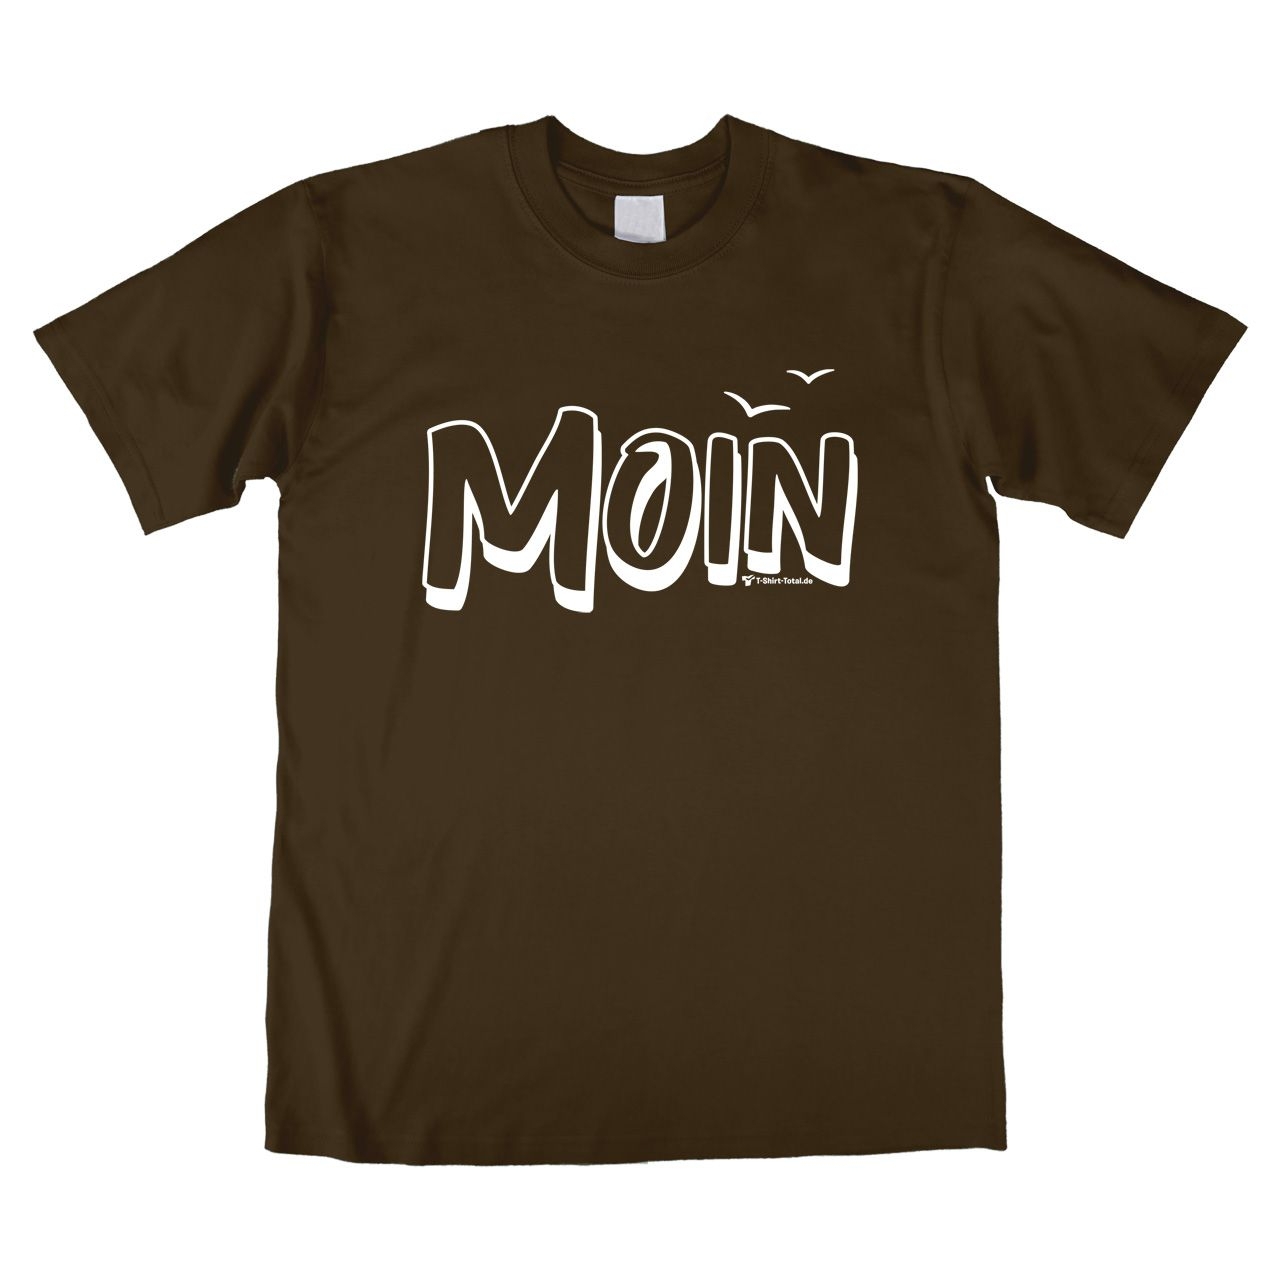 Moin mit Möwen Unisex T-Shirt braun Large